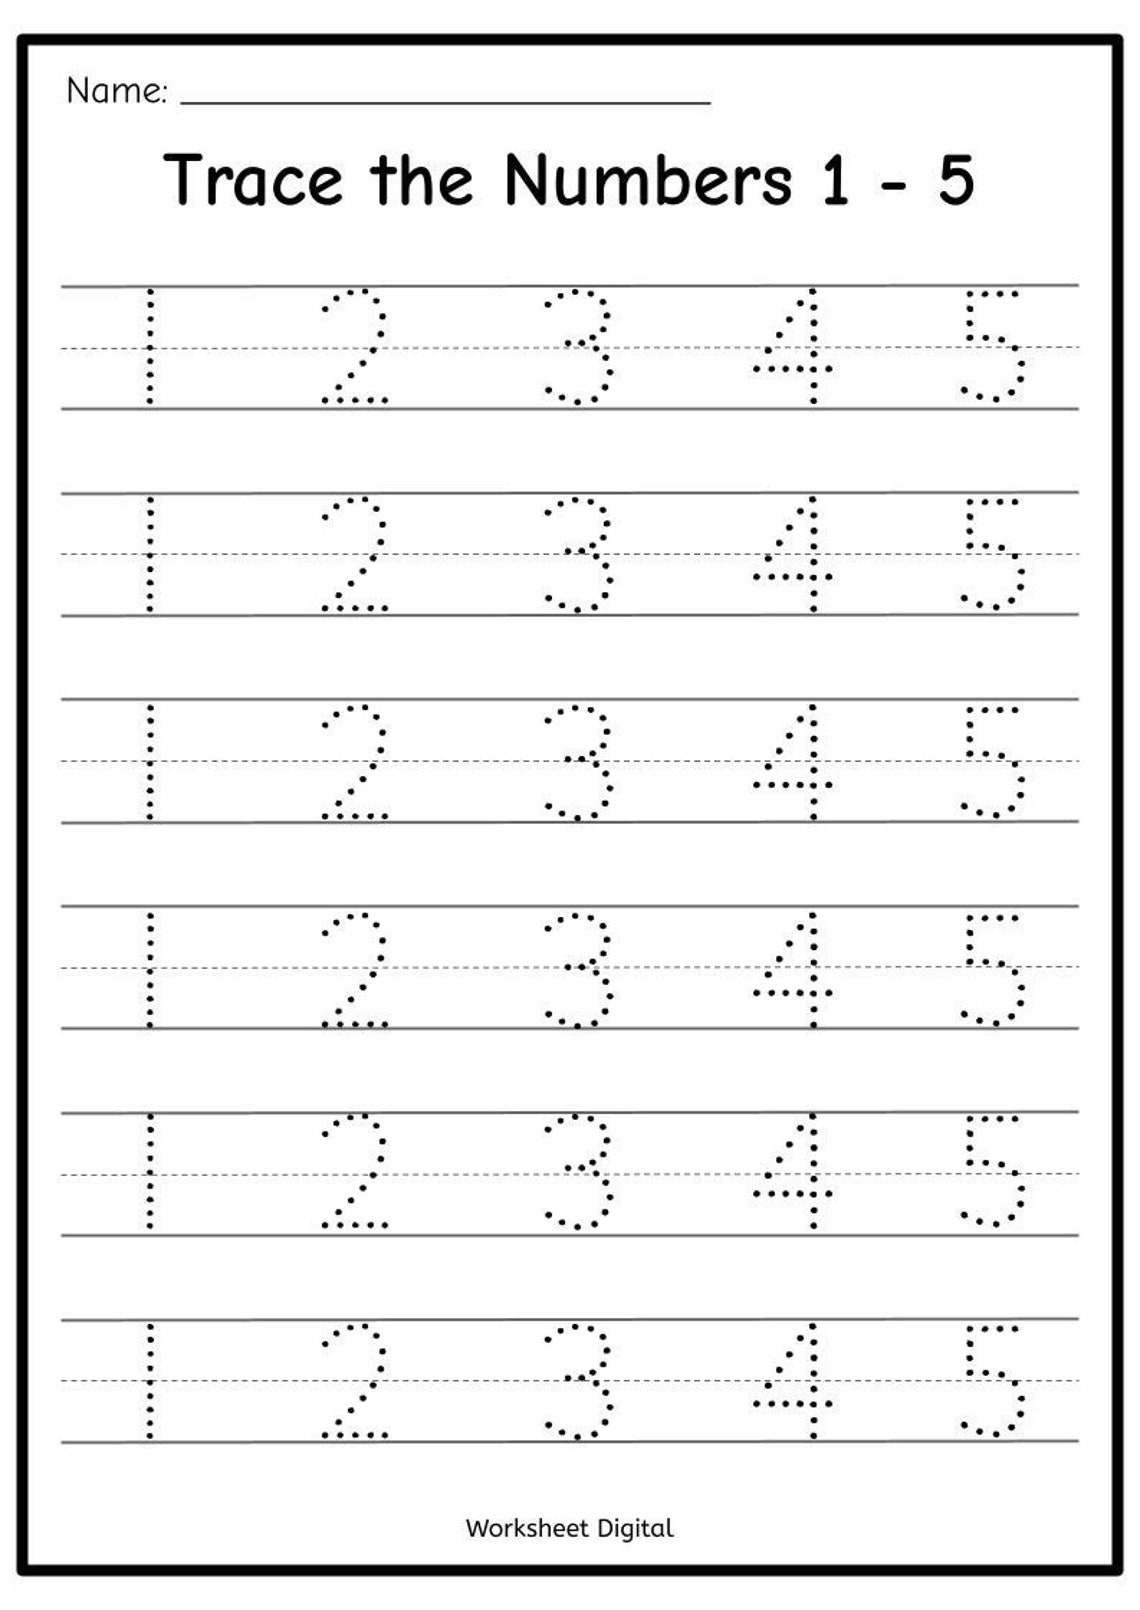 printable-numbers-1-50-tracing-worksheets-for-preschool-etsy